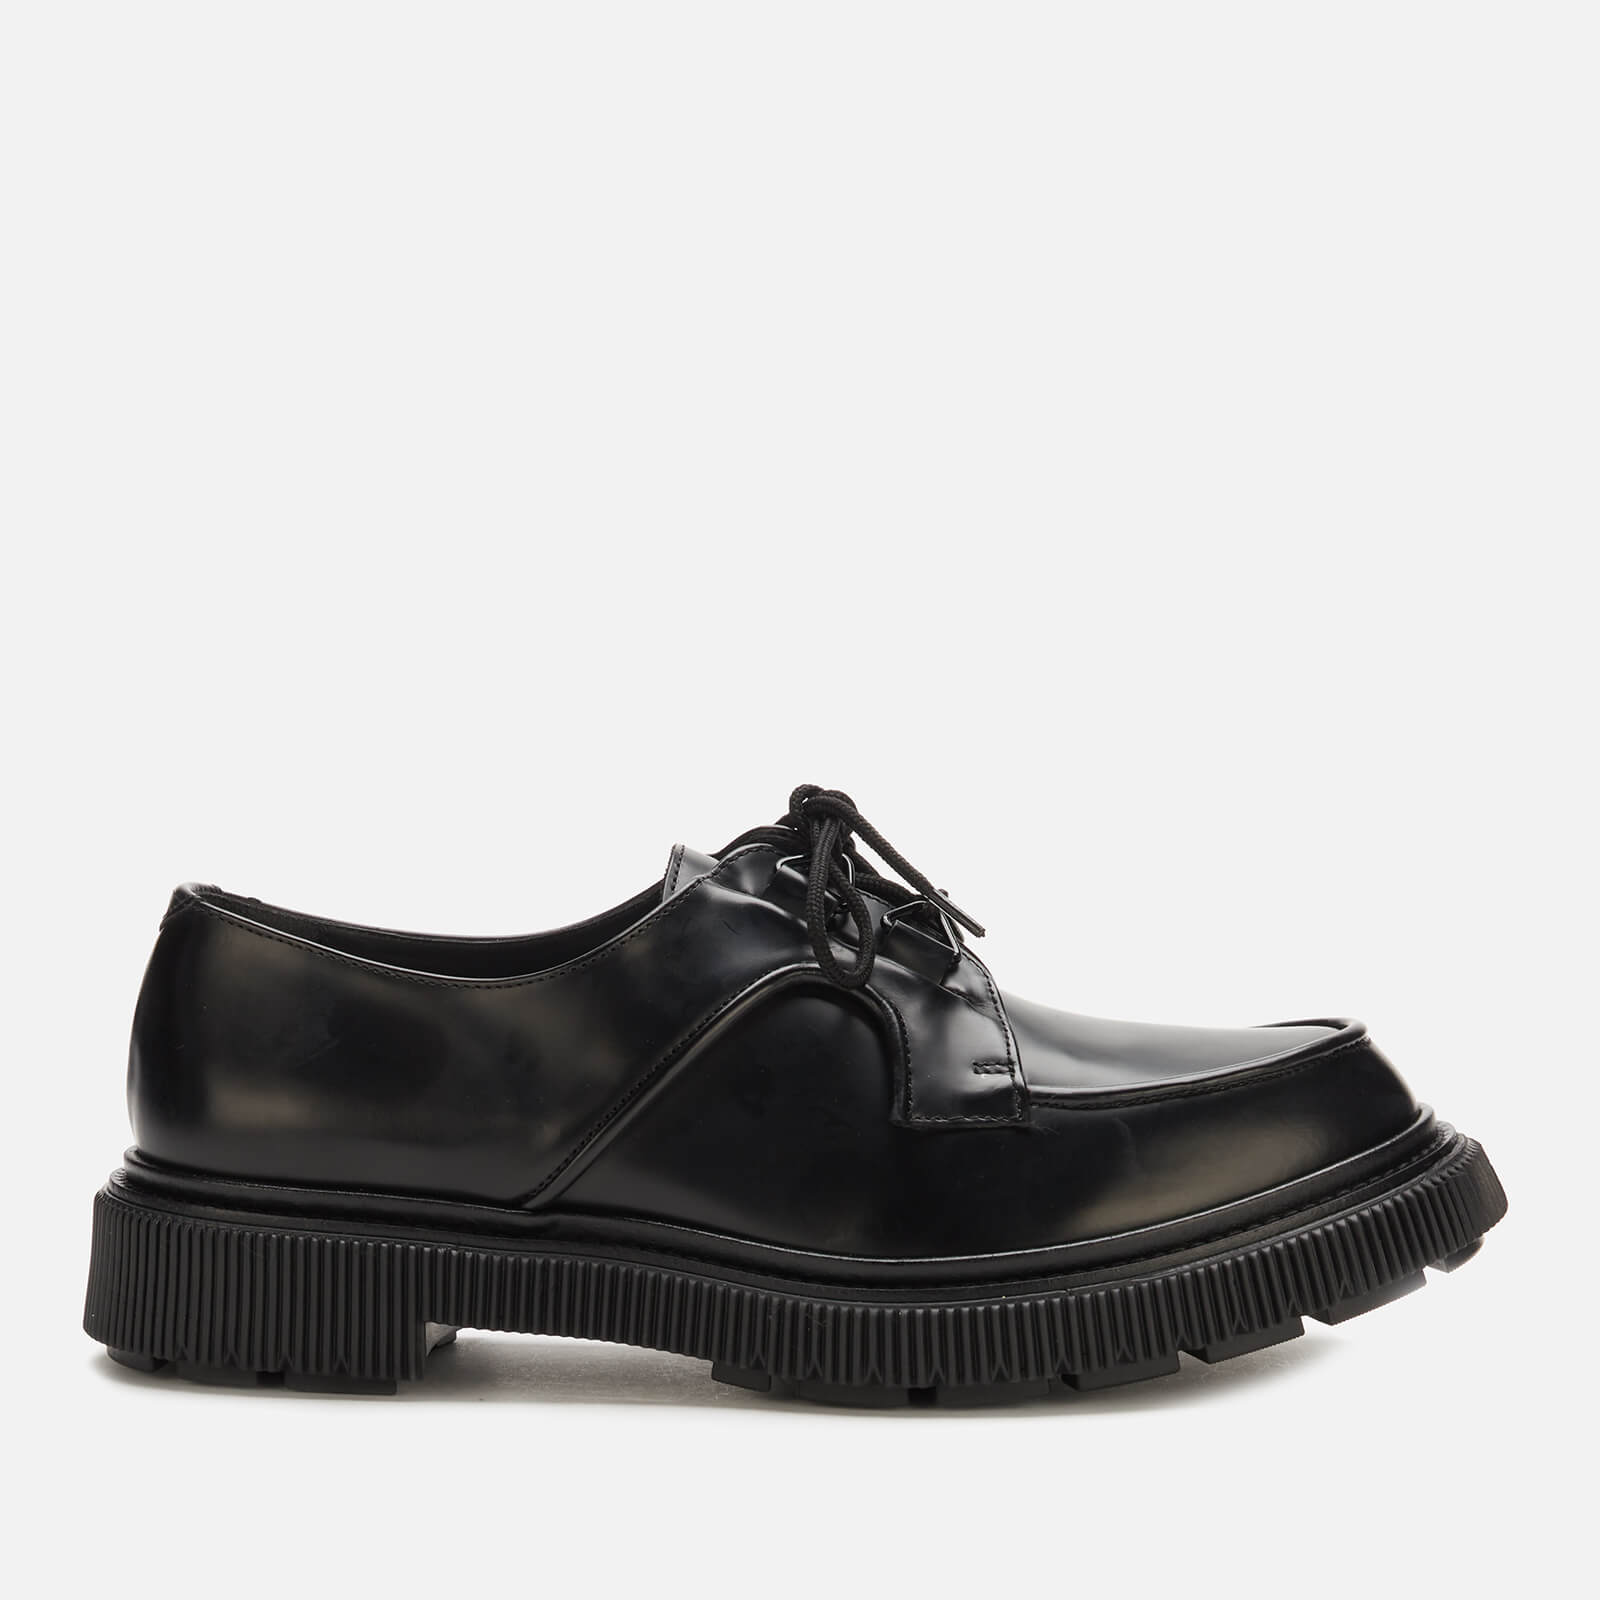 Adieu Men's Type 175 Leather Derby Shoes - Black - UK 7